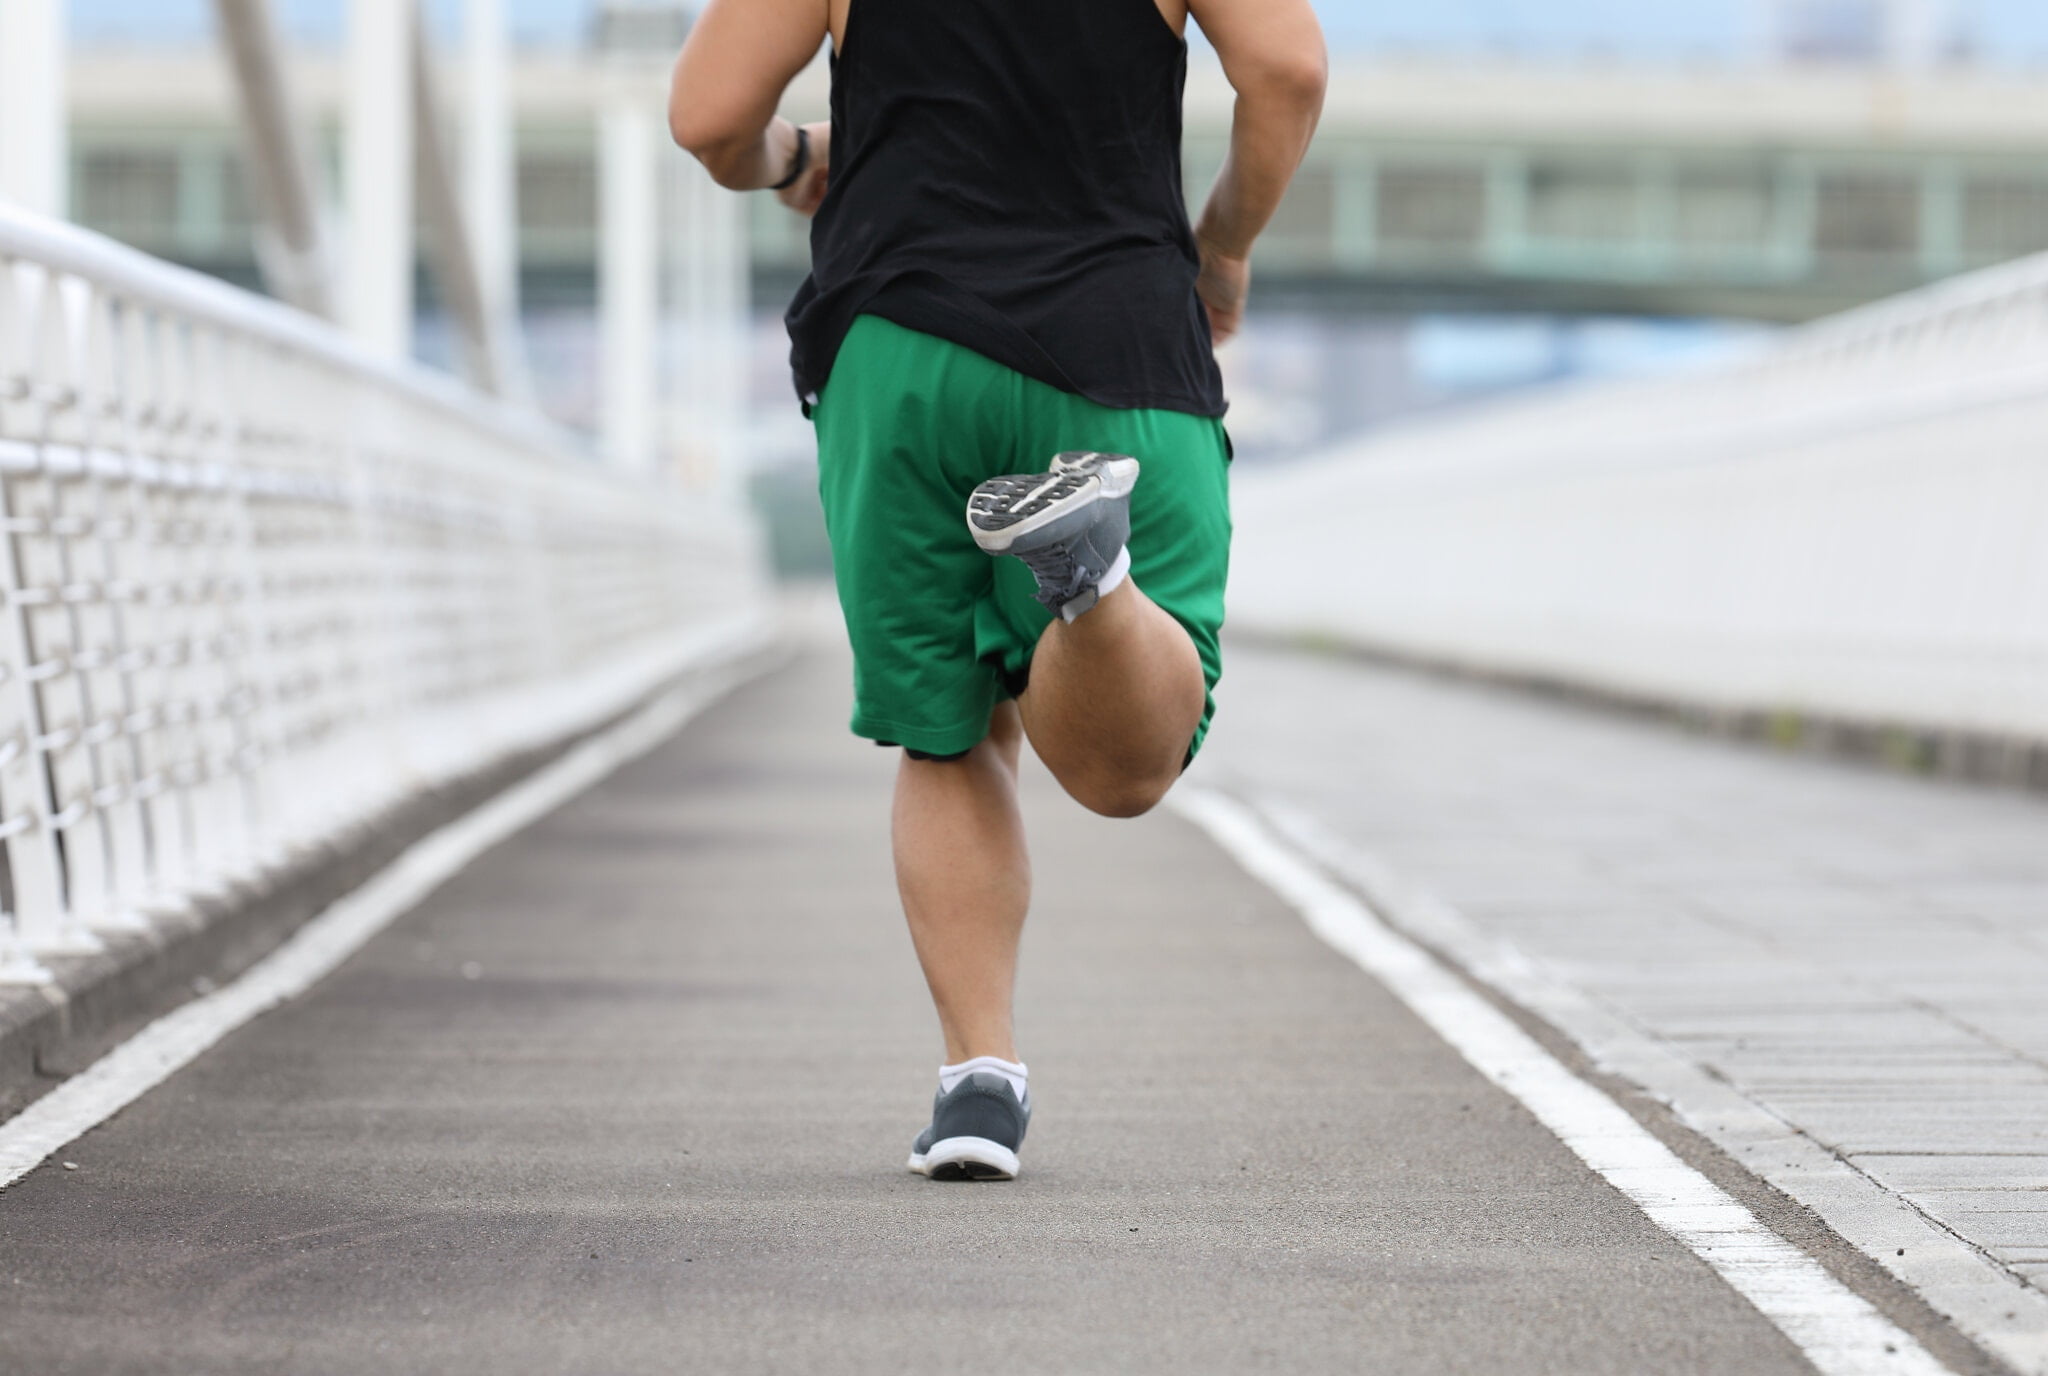 29sci physed exercise weight superJumbo لصحة أفضل وعمر أطول التمارين أكثر أهمية من فقدان الوزن! مجلة نقطة العلمية